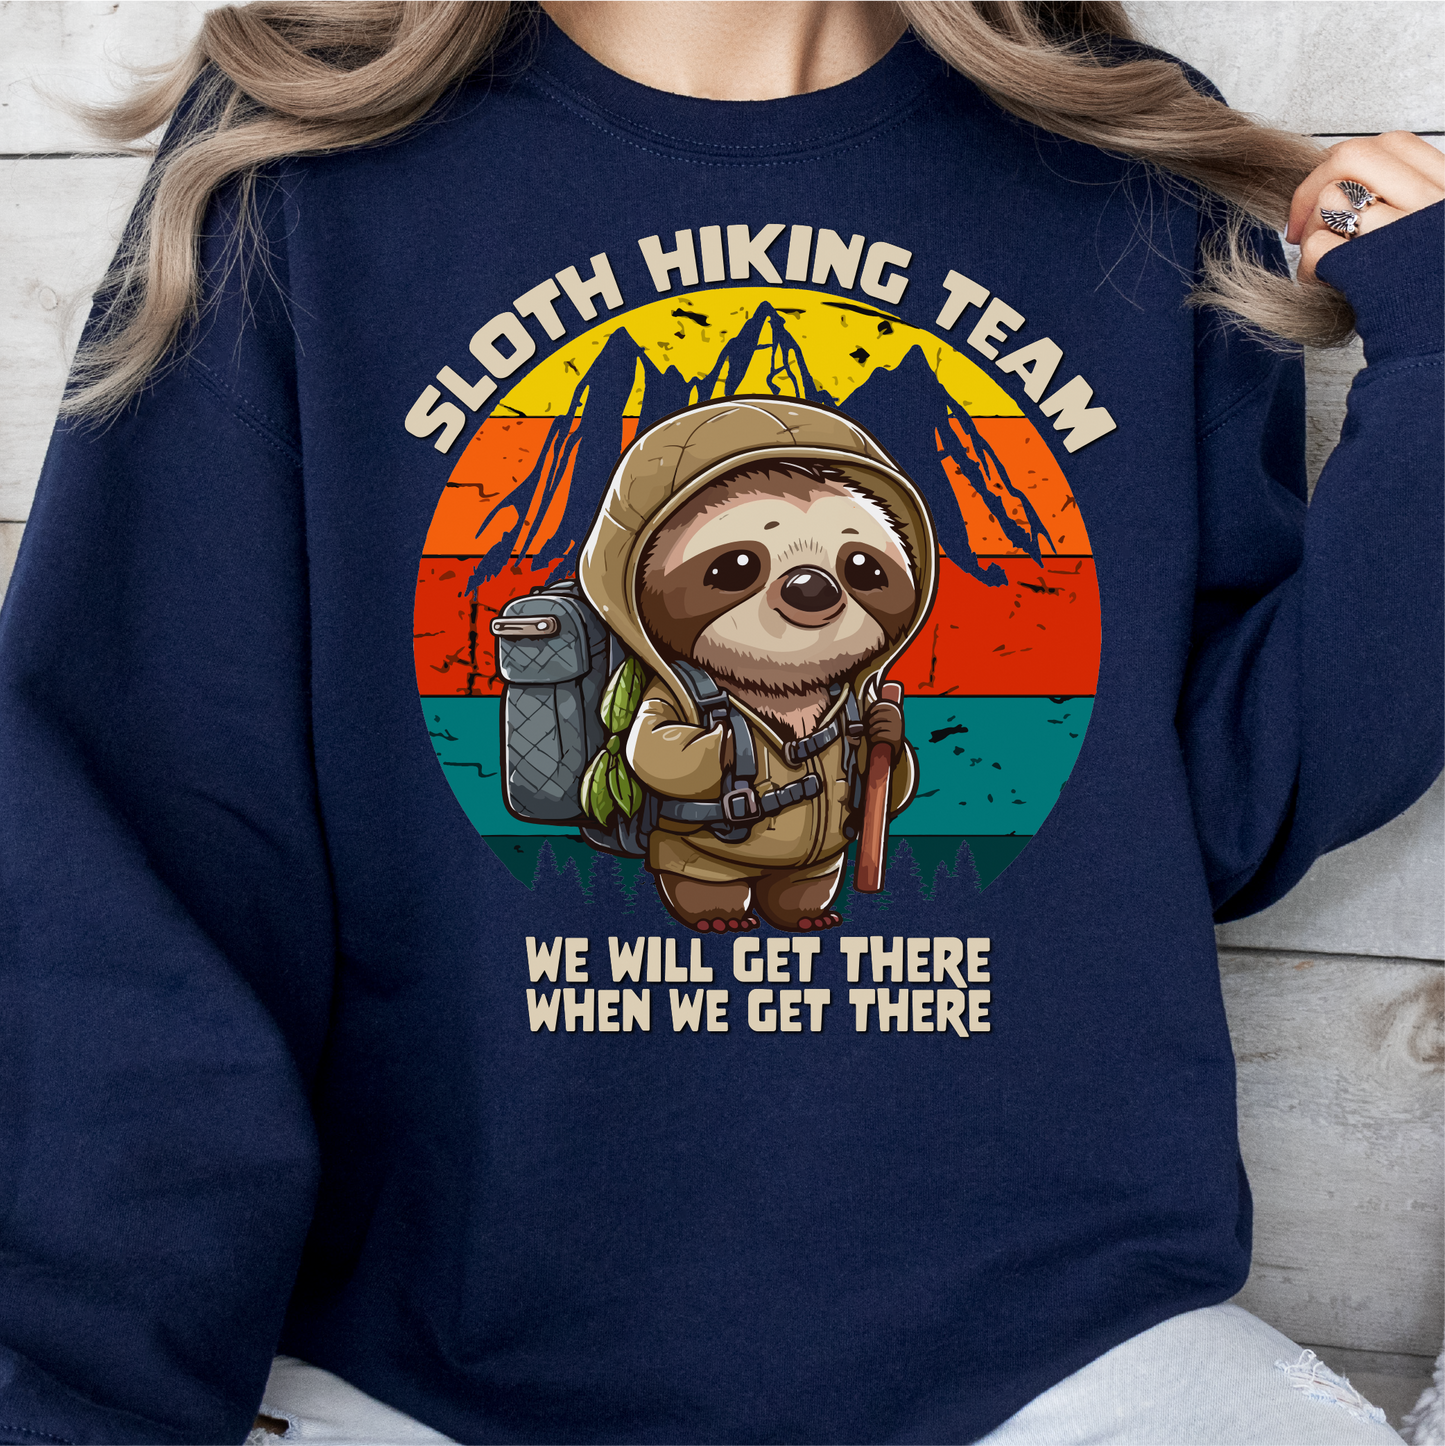 Sloth Hiking Team Sweatshirt, A Funny Sloth Sweatshirt